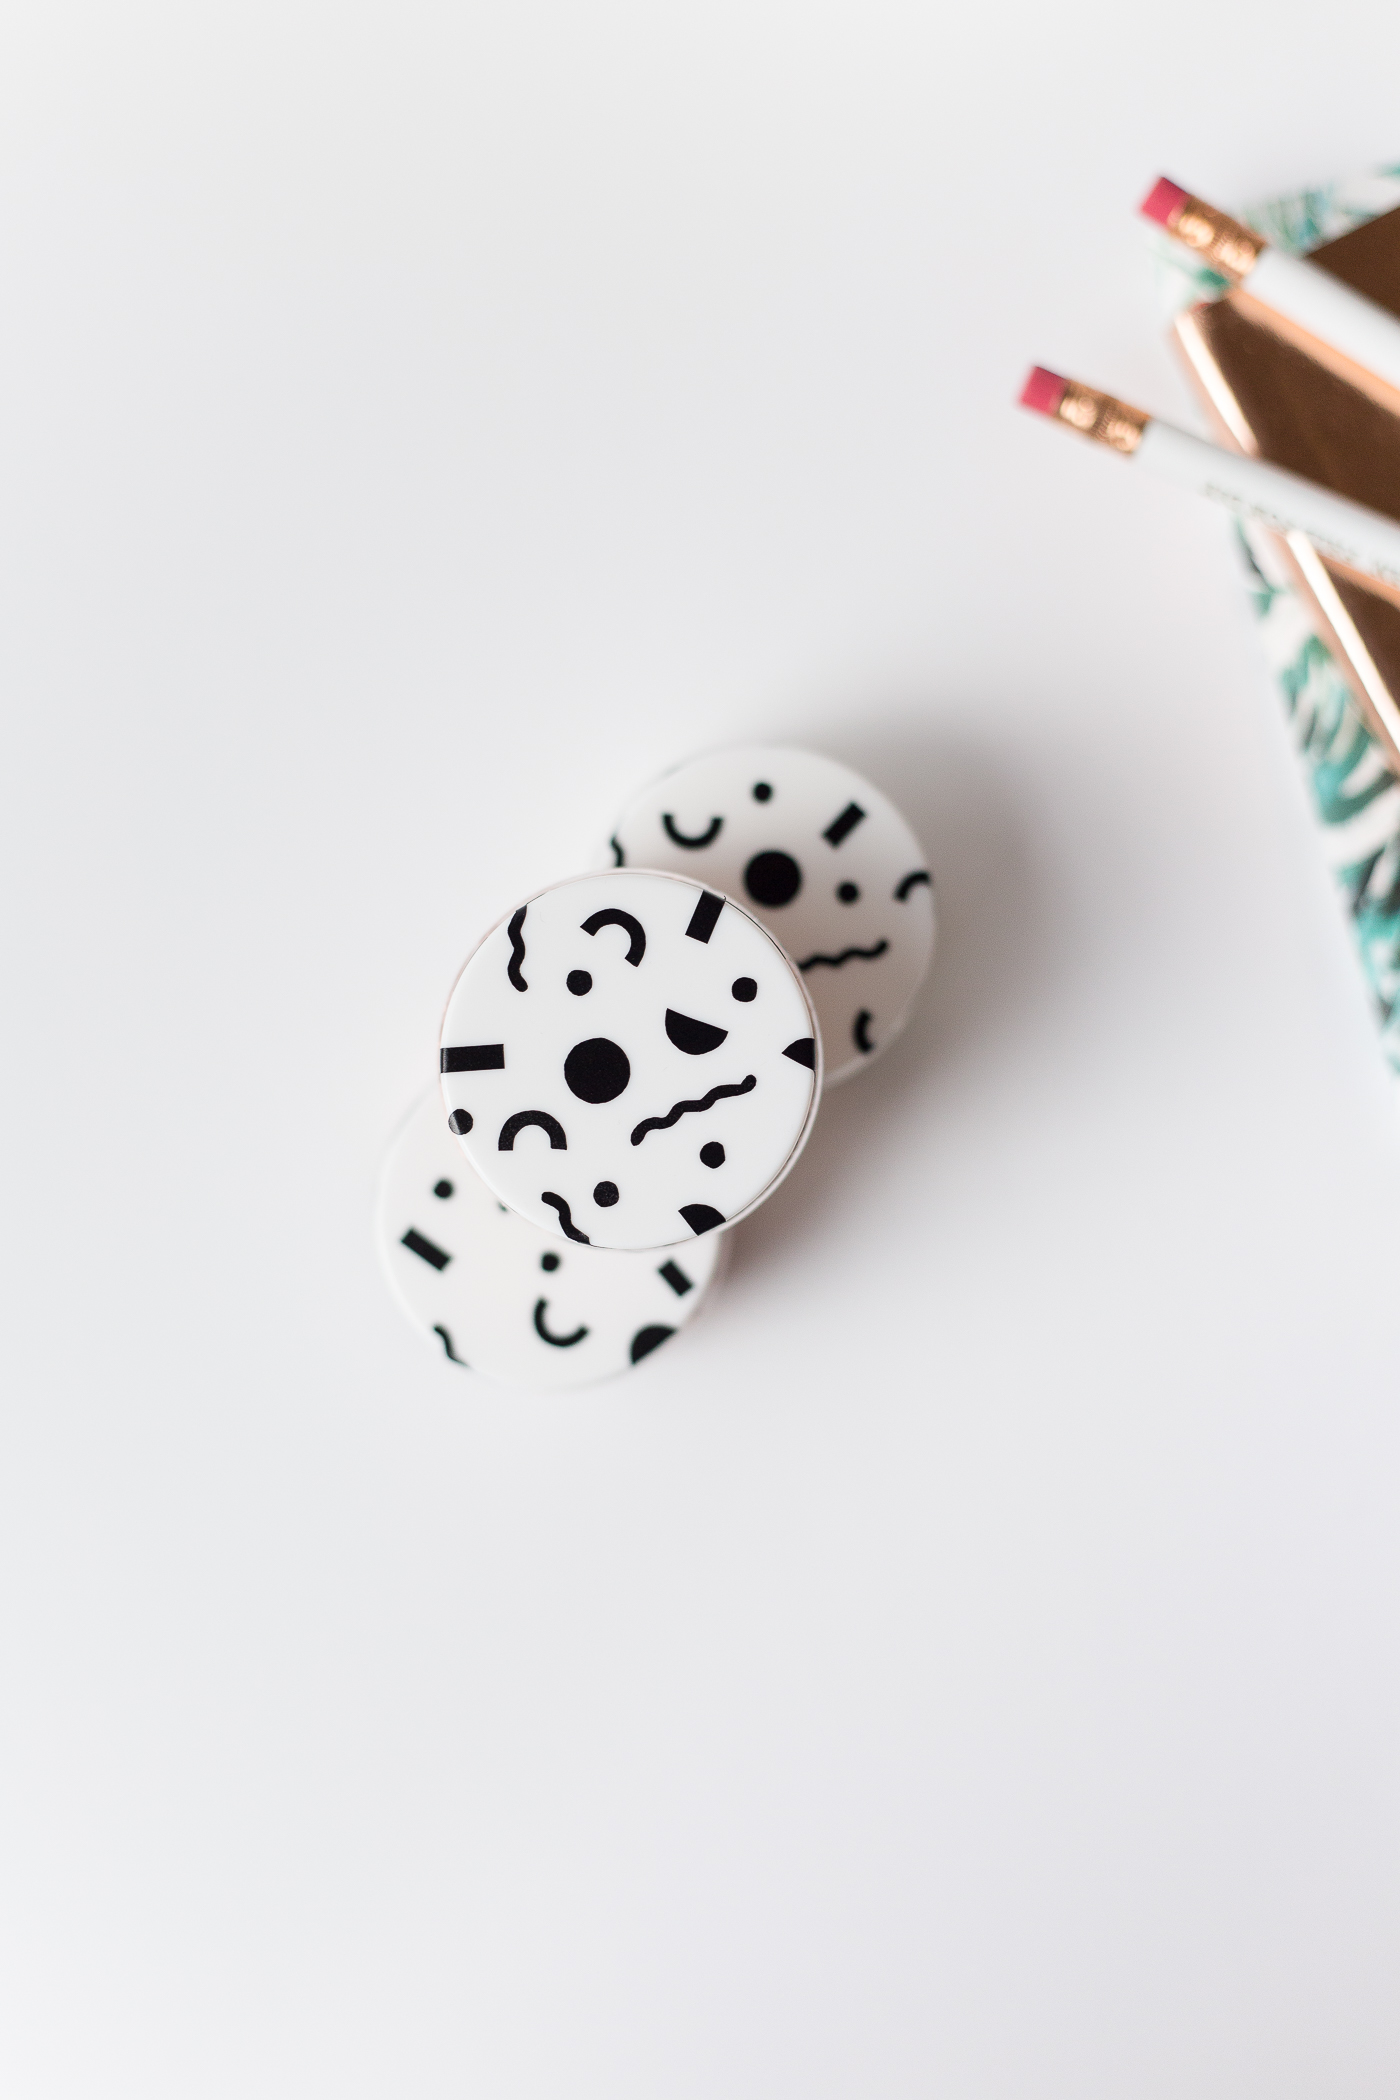 cute sticker patterned storage pots tutorial @fallfordiy